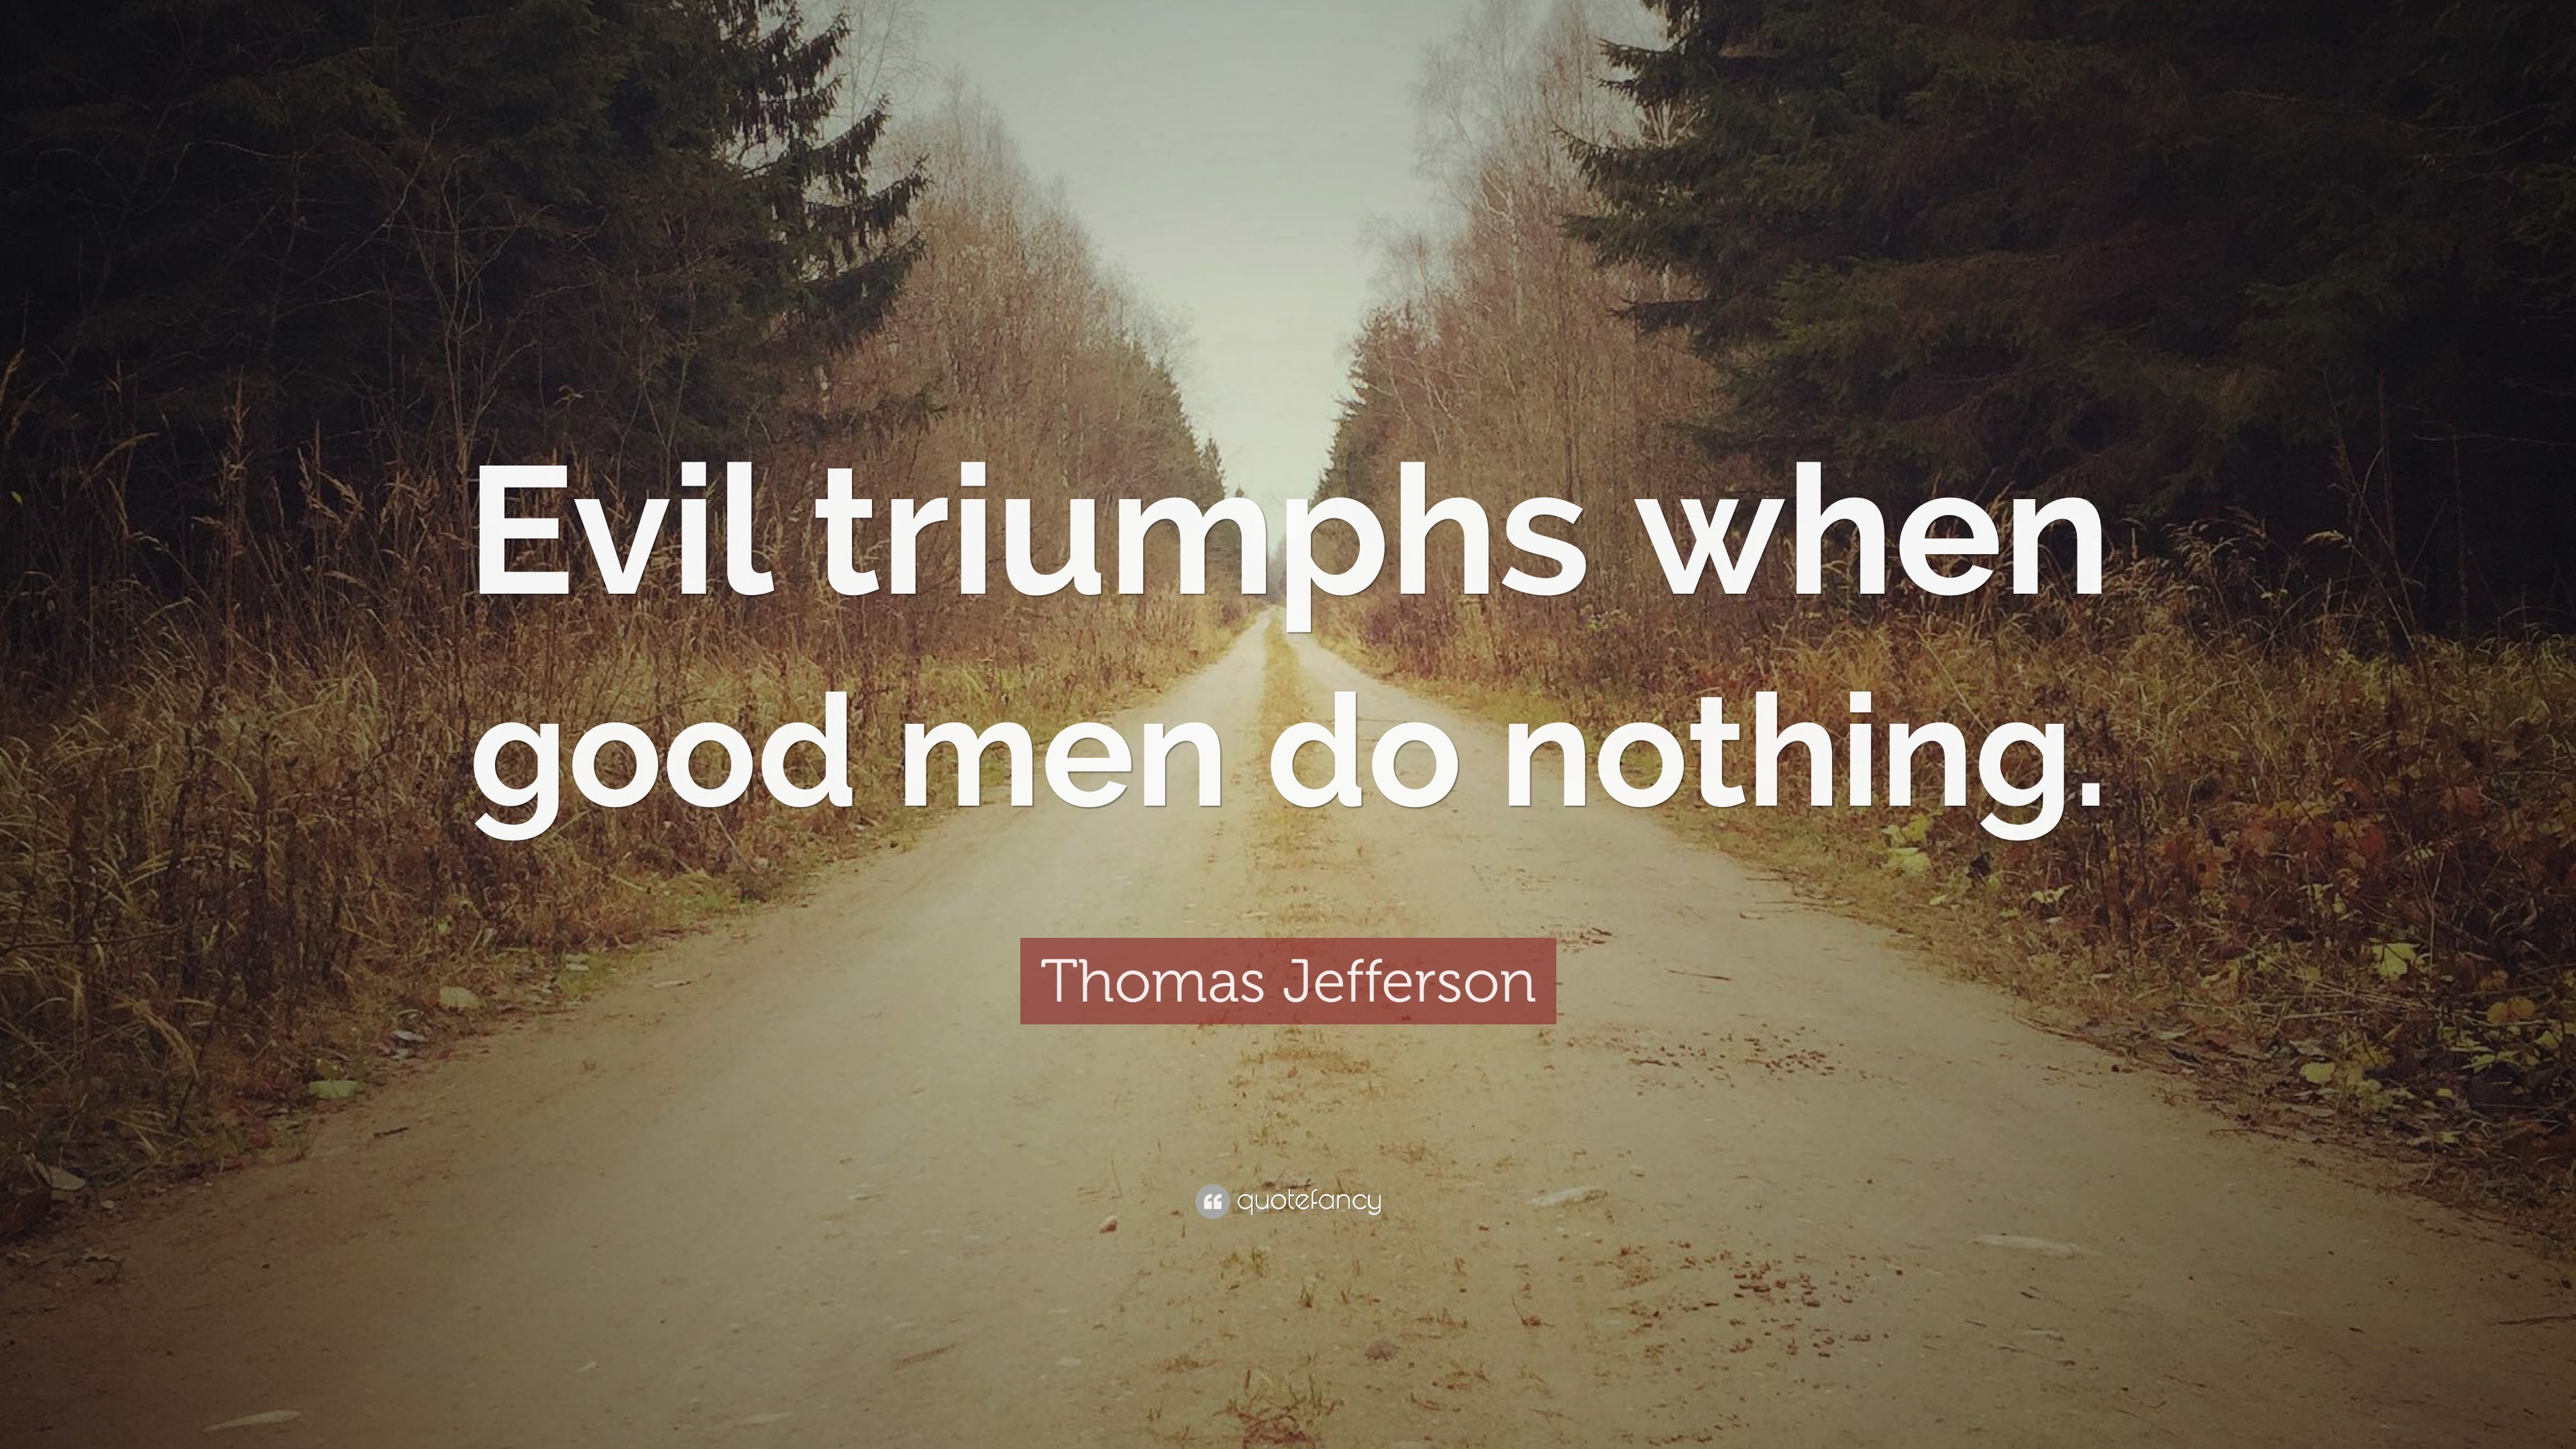 3840x2160 Thomas Jefferson Quote: “Evil triumphs when good men do nothing.”